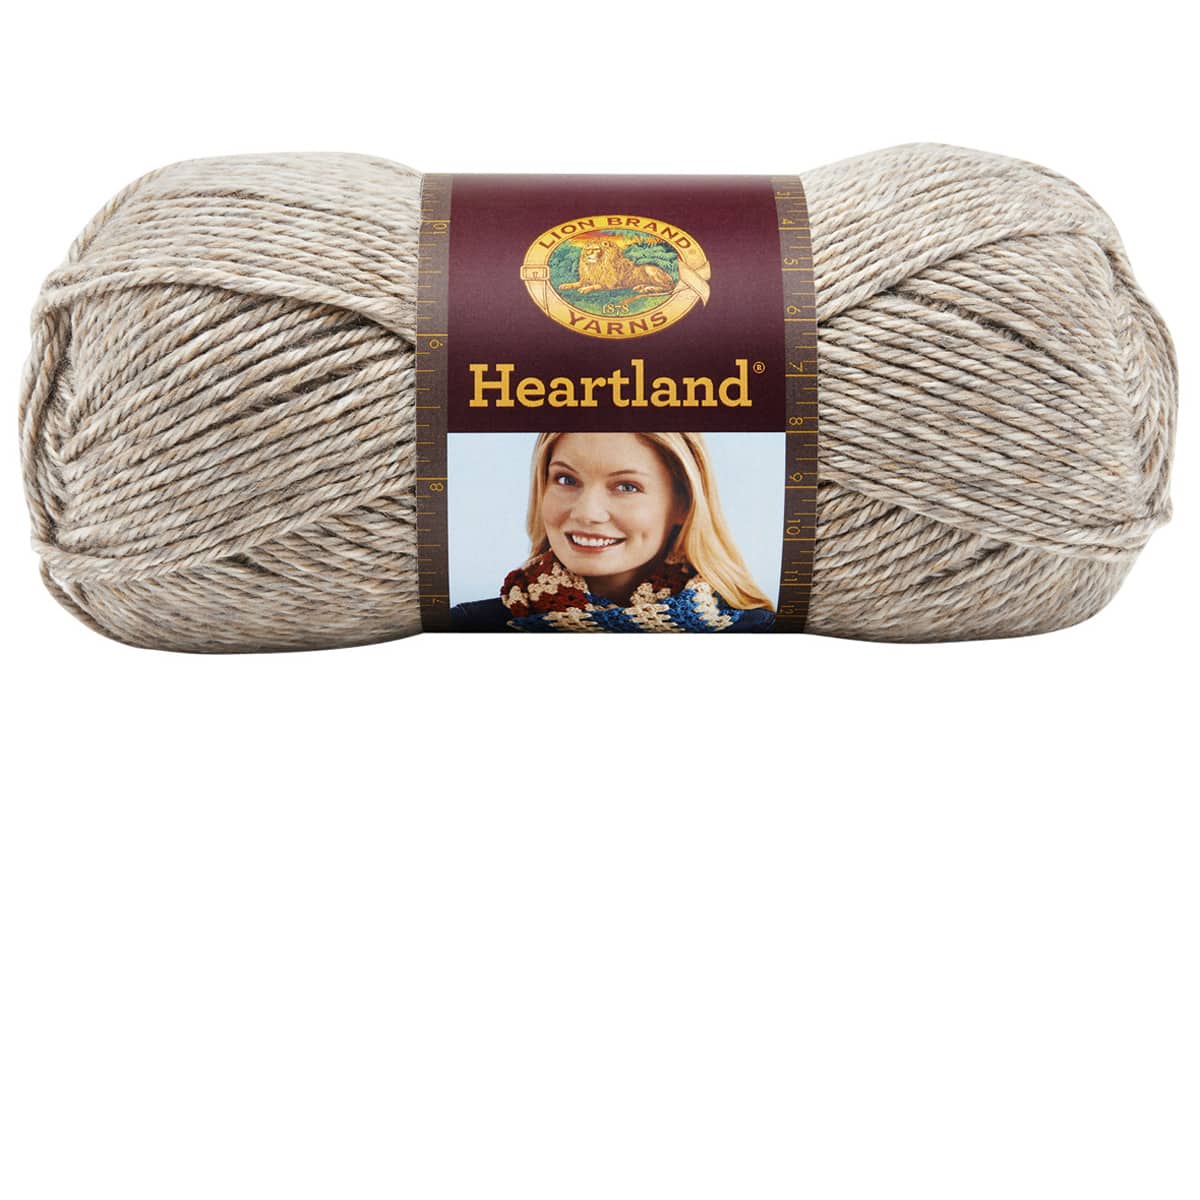 (3-pack) Lion Brand Yarn 136-143 Heartland Yarn, Kobuk Valley - Purple